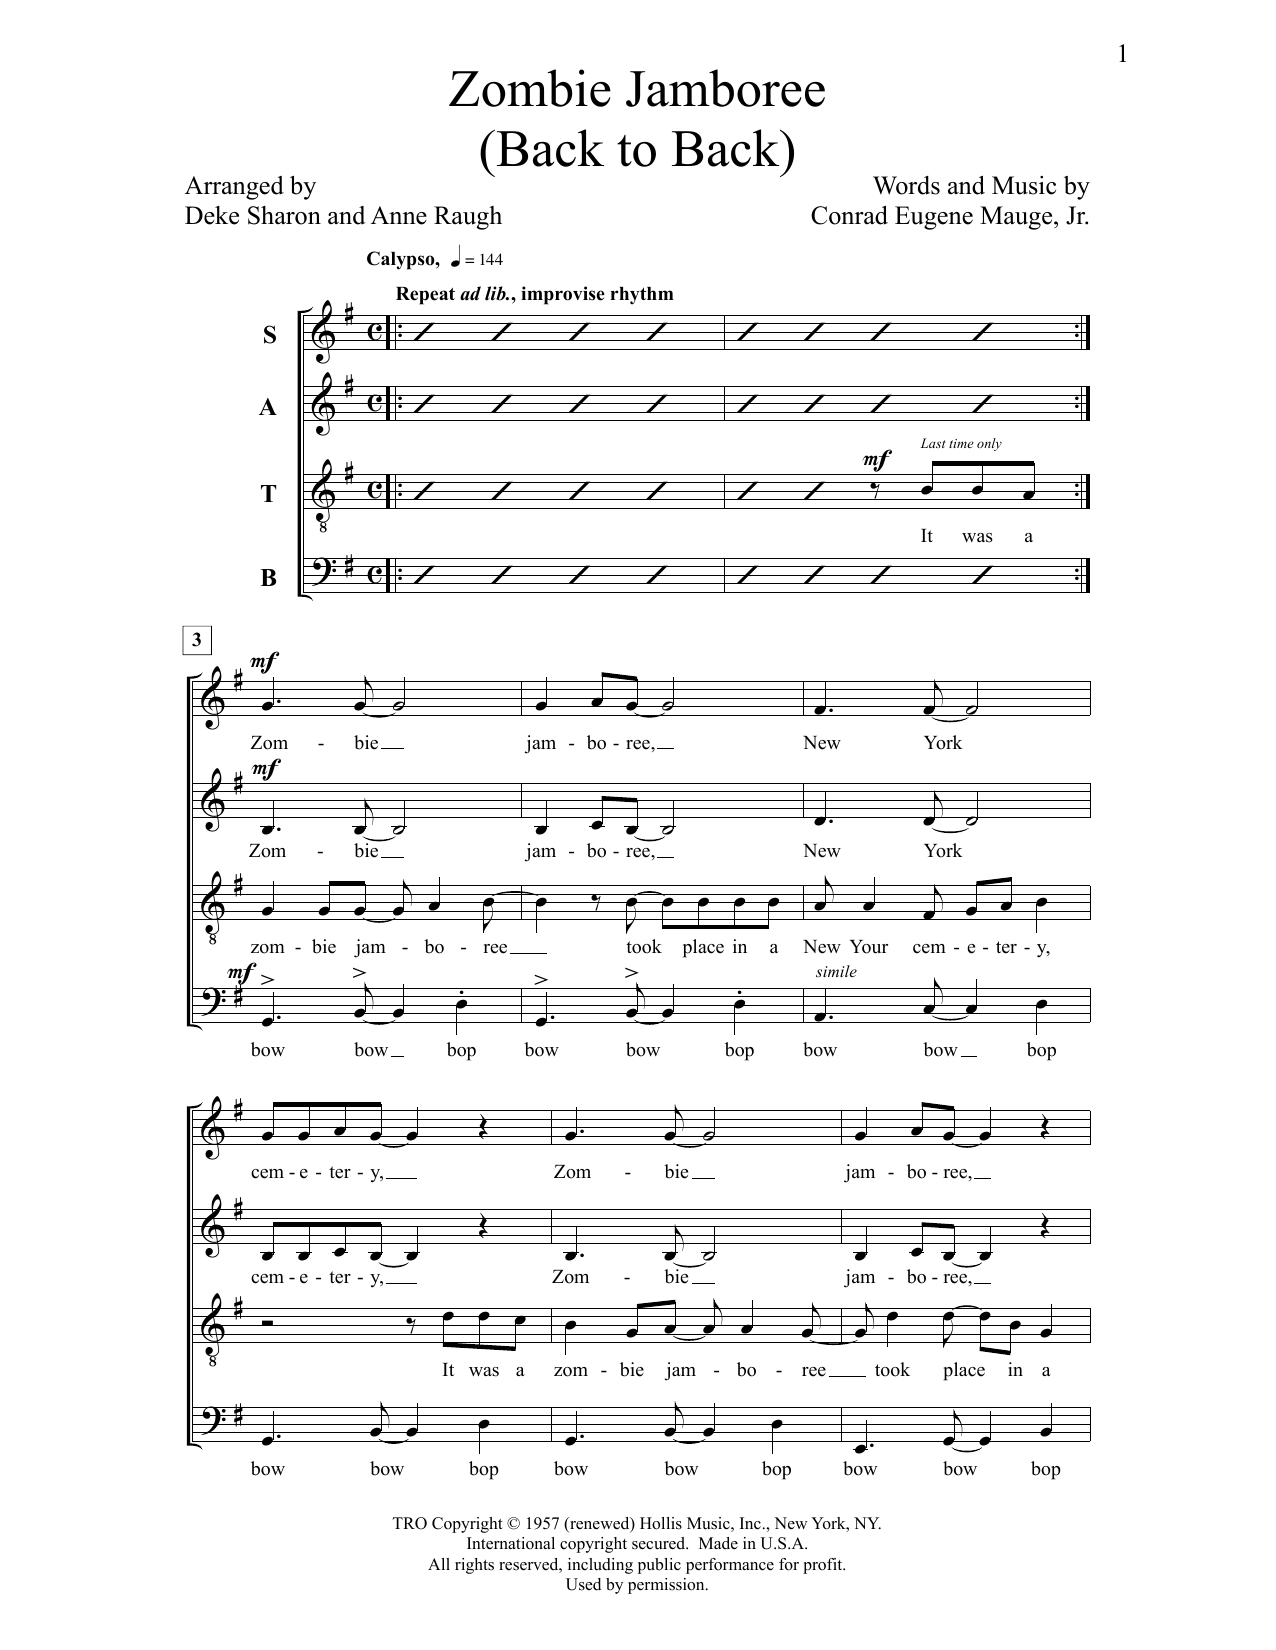 Deke Sharon Zombie Jamboree Sheet Music Notes & Chords for Choral - Download or Print PDF